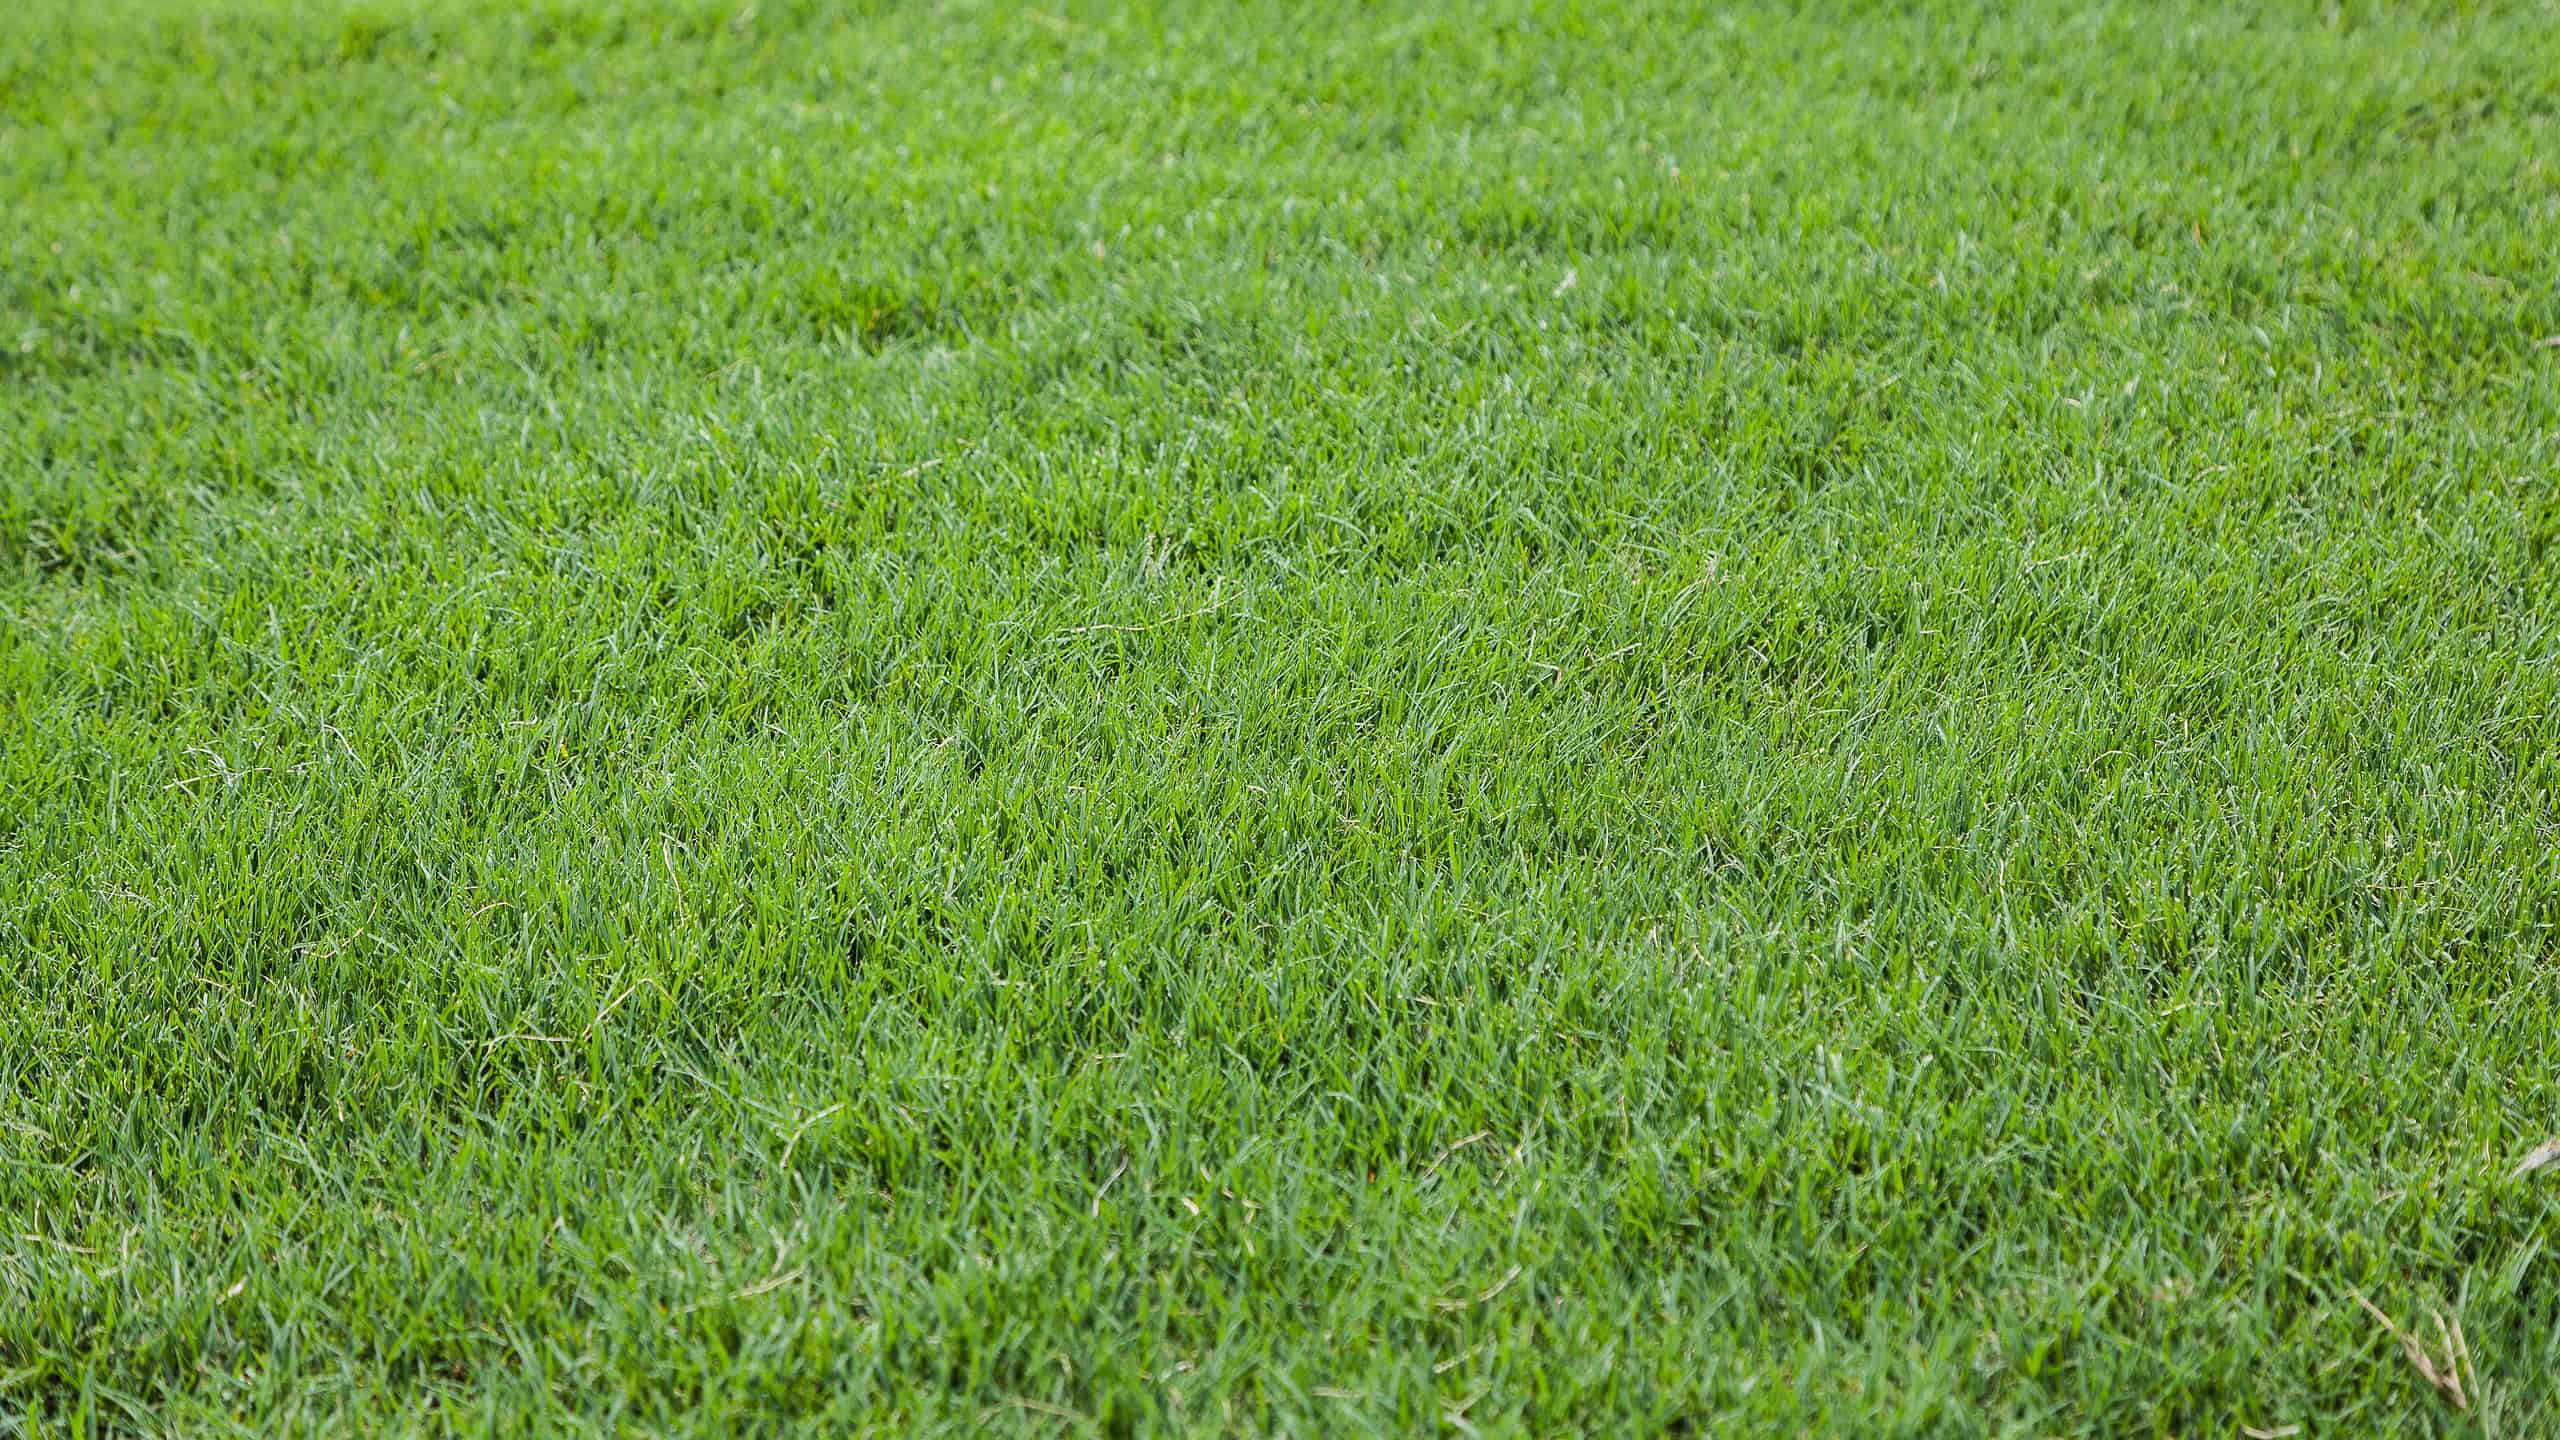 A close-up image of Bermuda grass.